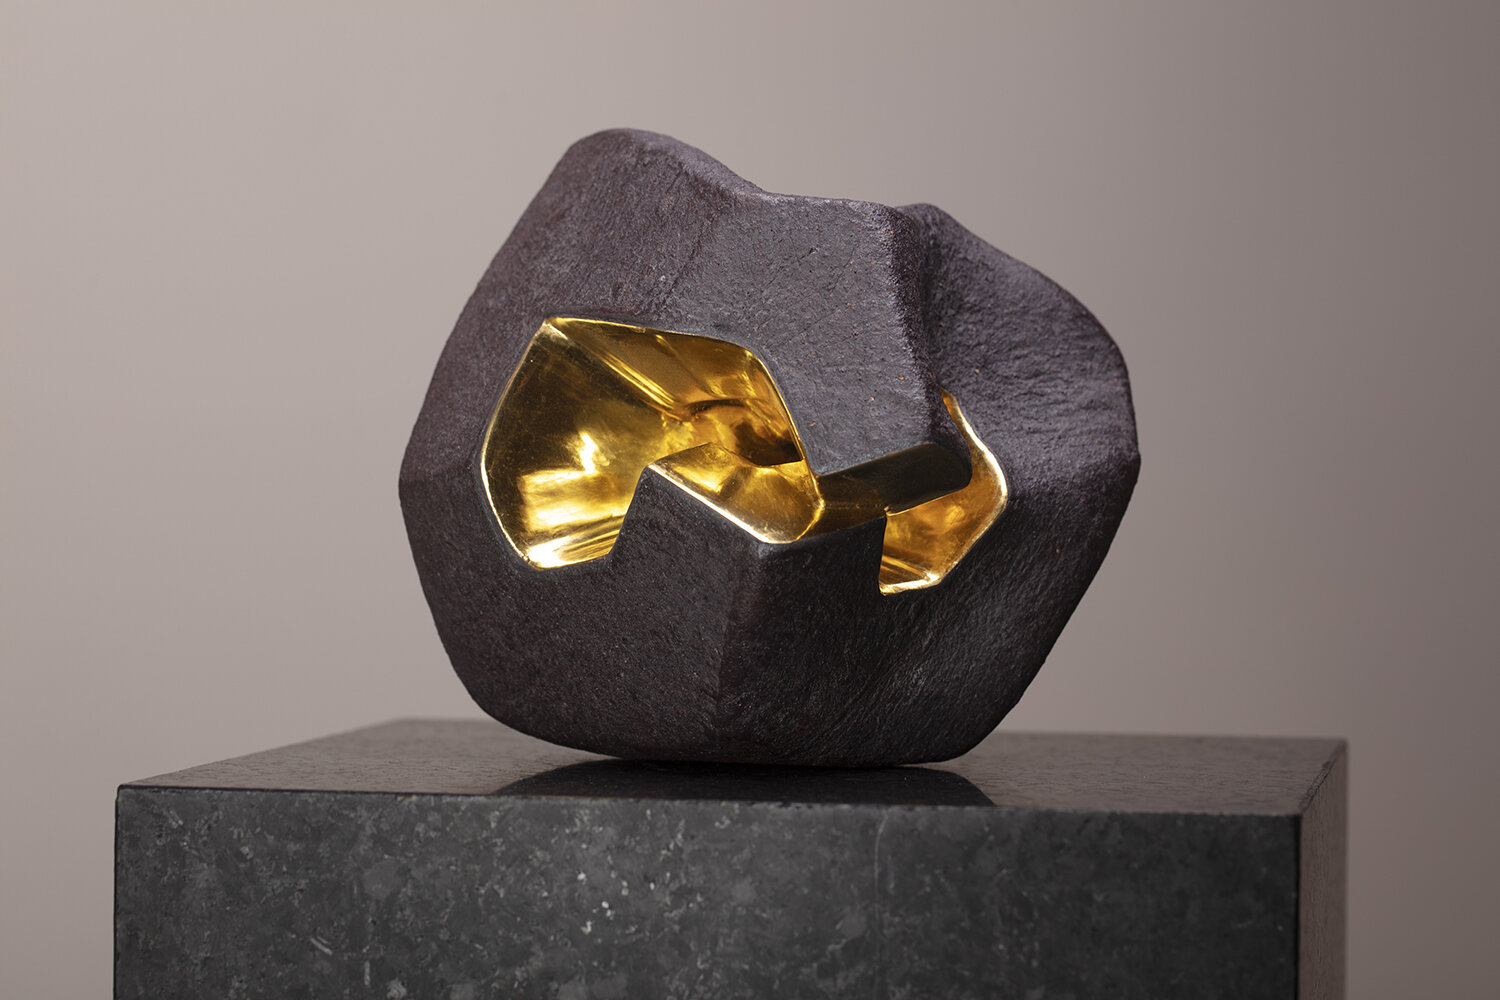 jorge-yazpik-untitled-3-sculptures-piece1-solid-clay-goldleaf-2020-marion-friedmann-gallery.jpg